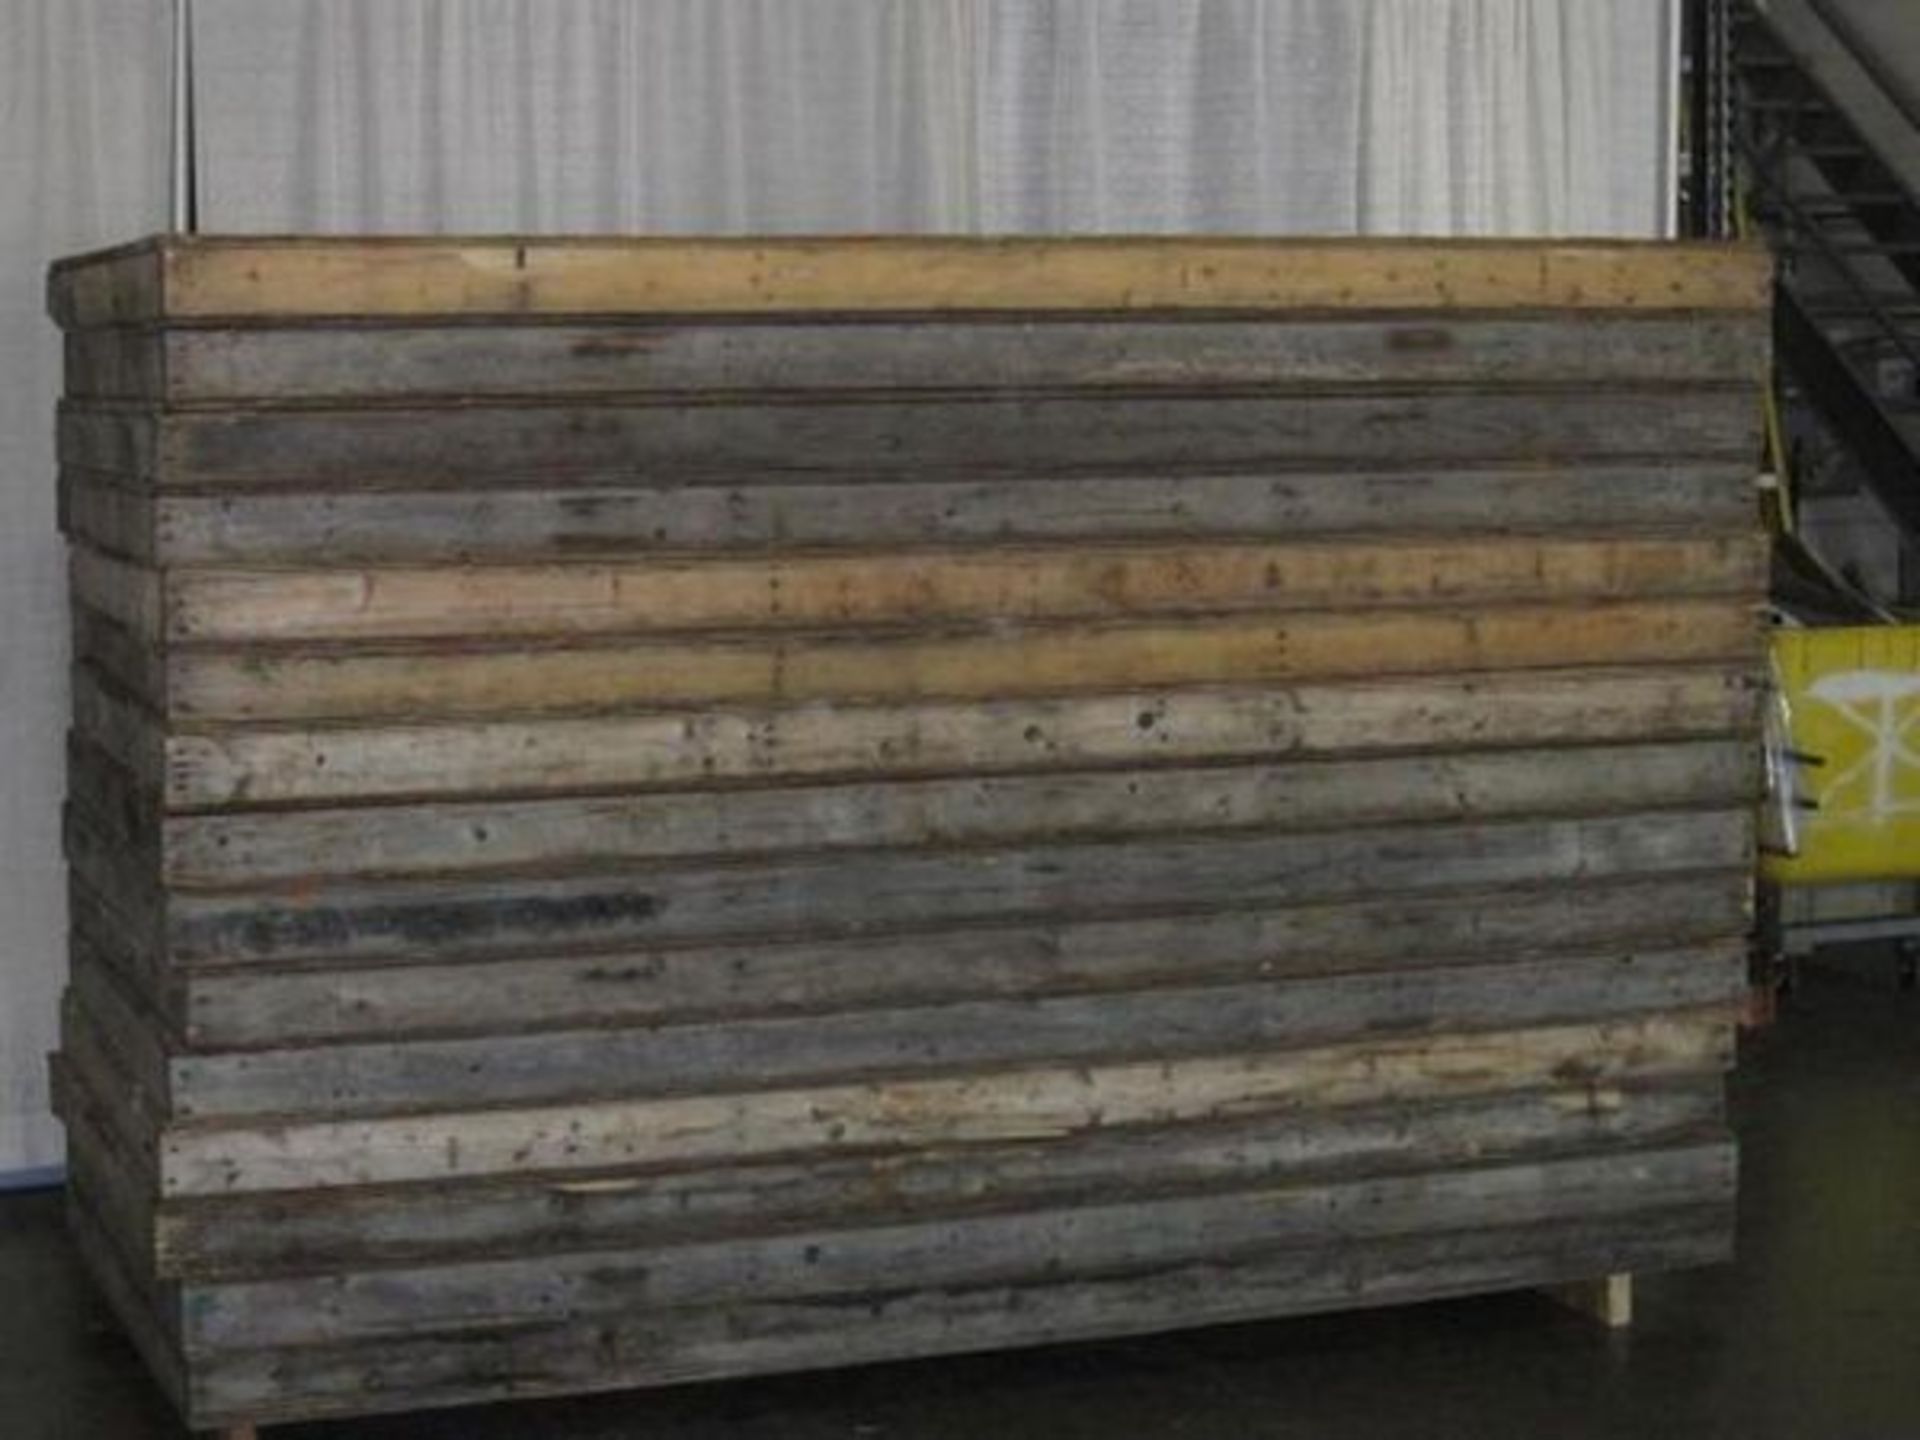 LOT: (15) 4 ft. x 8 ft. Plywood Sub-Flooring Decks